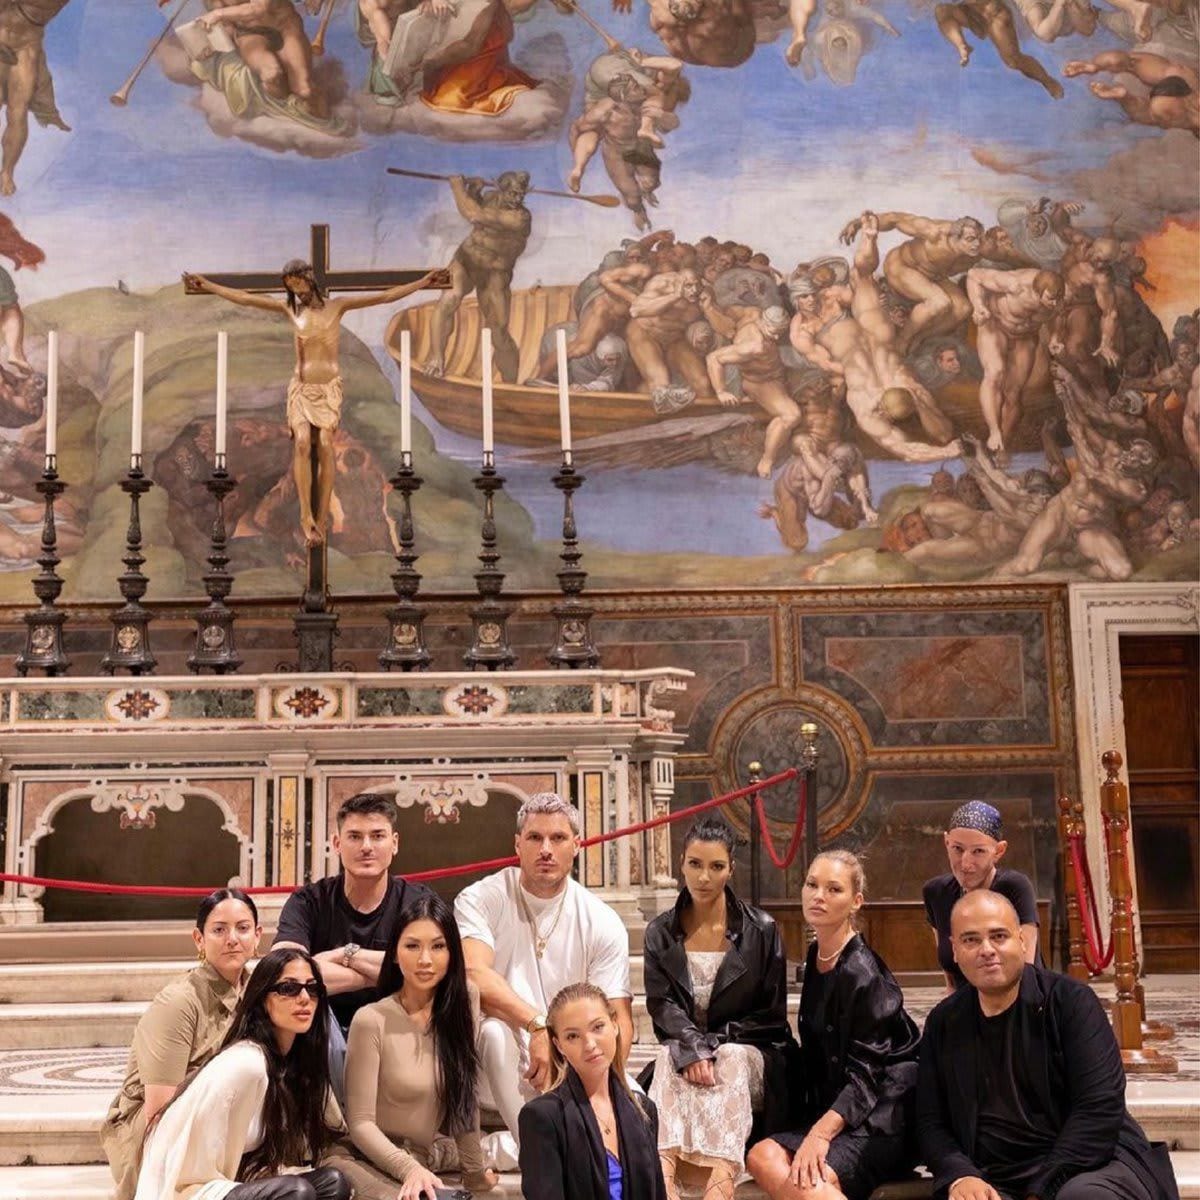 Kim Kardashian and Kate Moss' trip to the Vatican